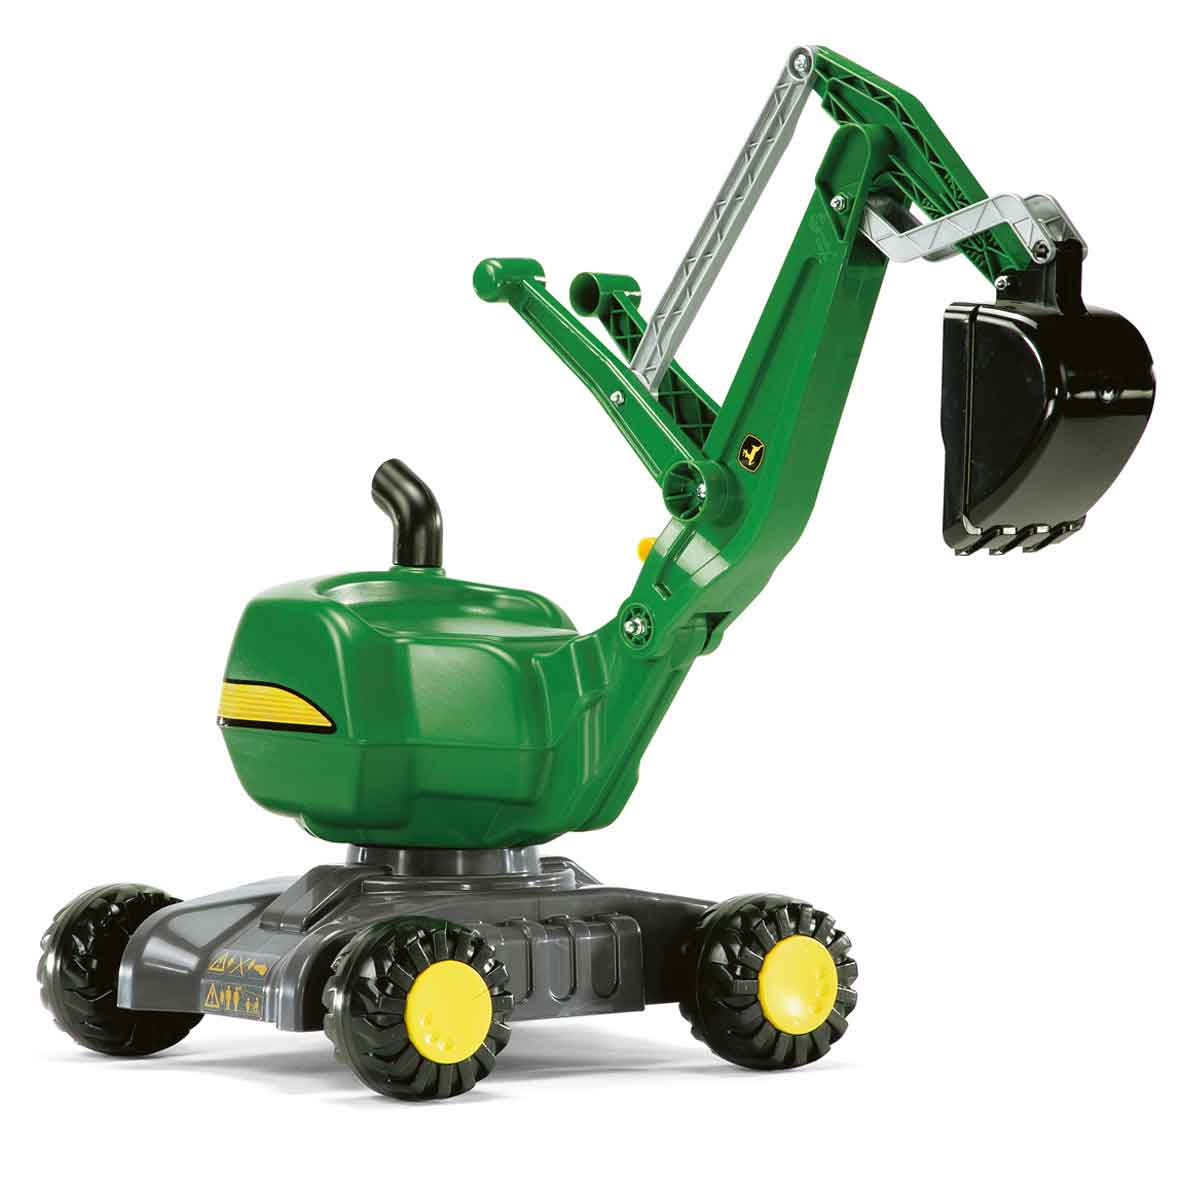 Rolly Toys 360 Degree Ride On John Deere Mobile Excavator, Green